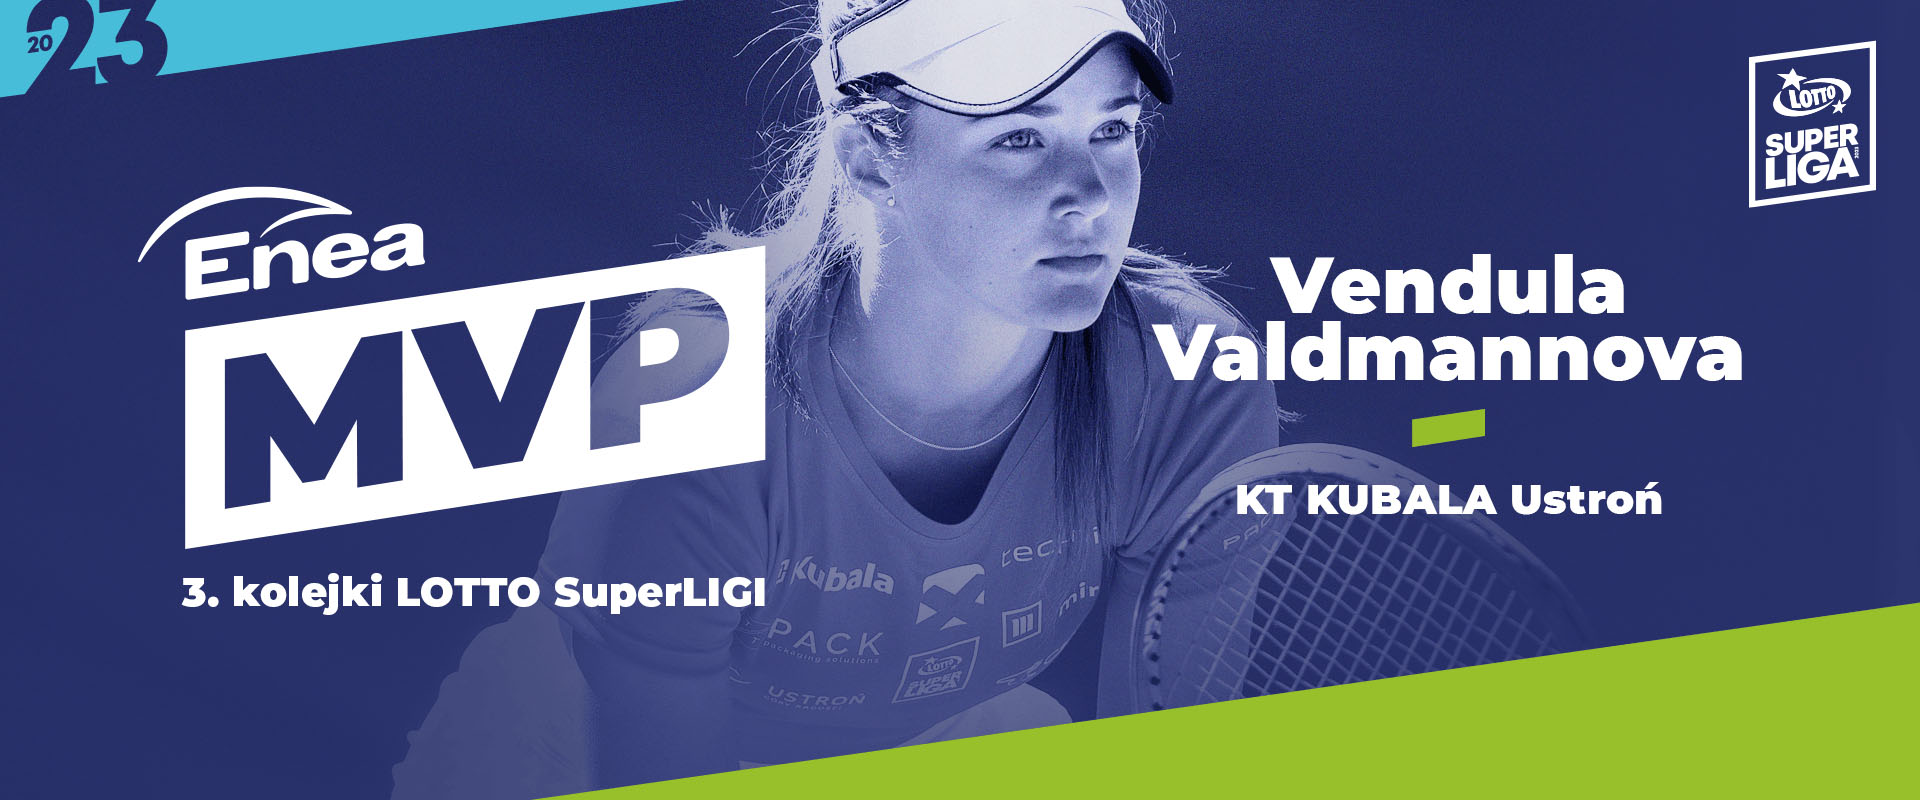 Vendula Valdmannová - Enea MVP 3. kola